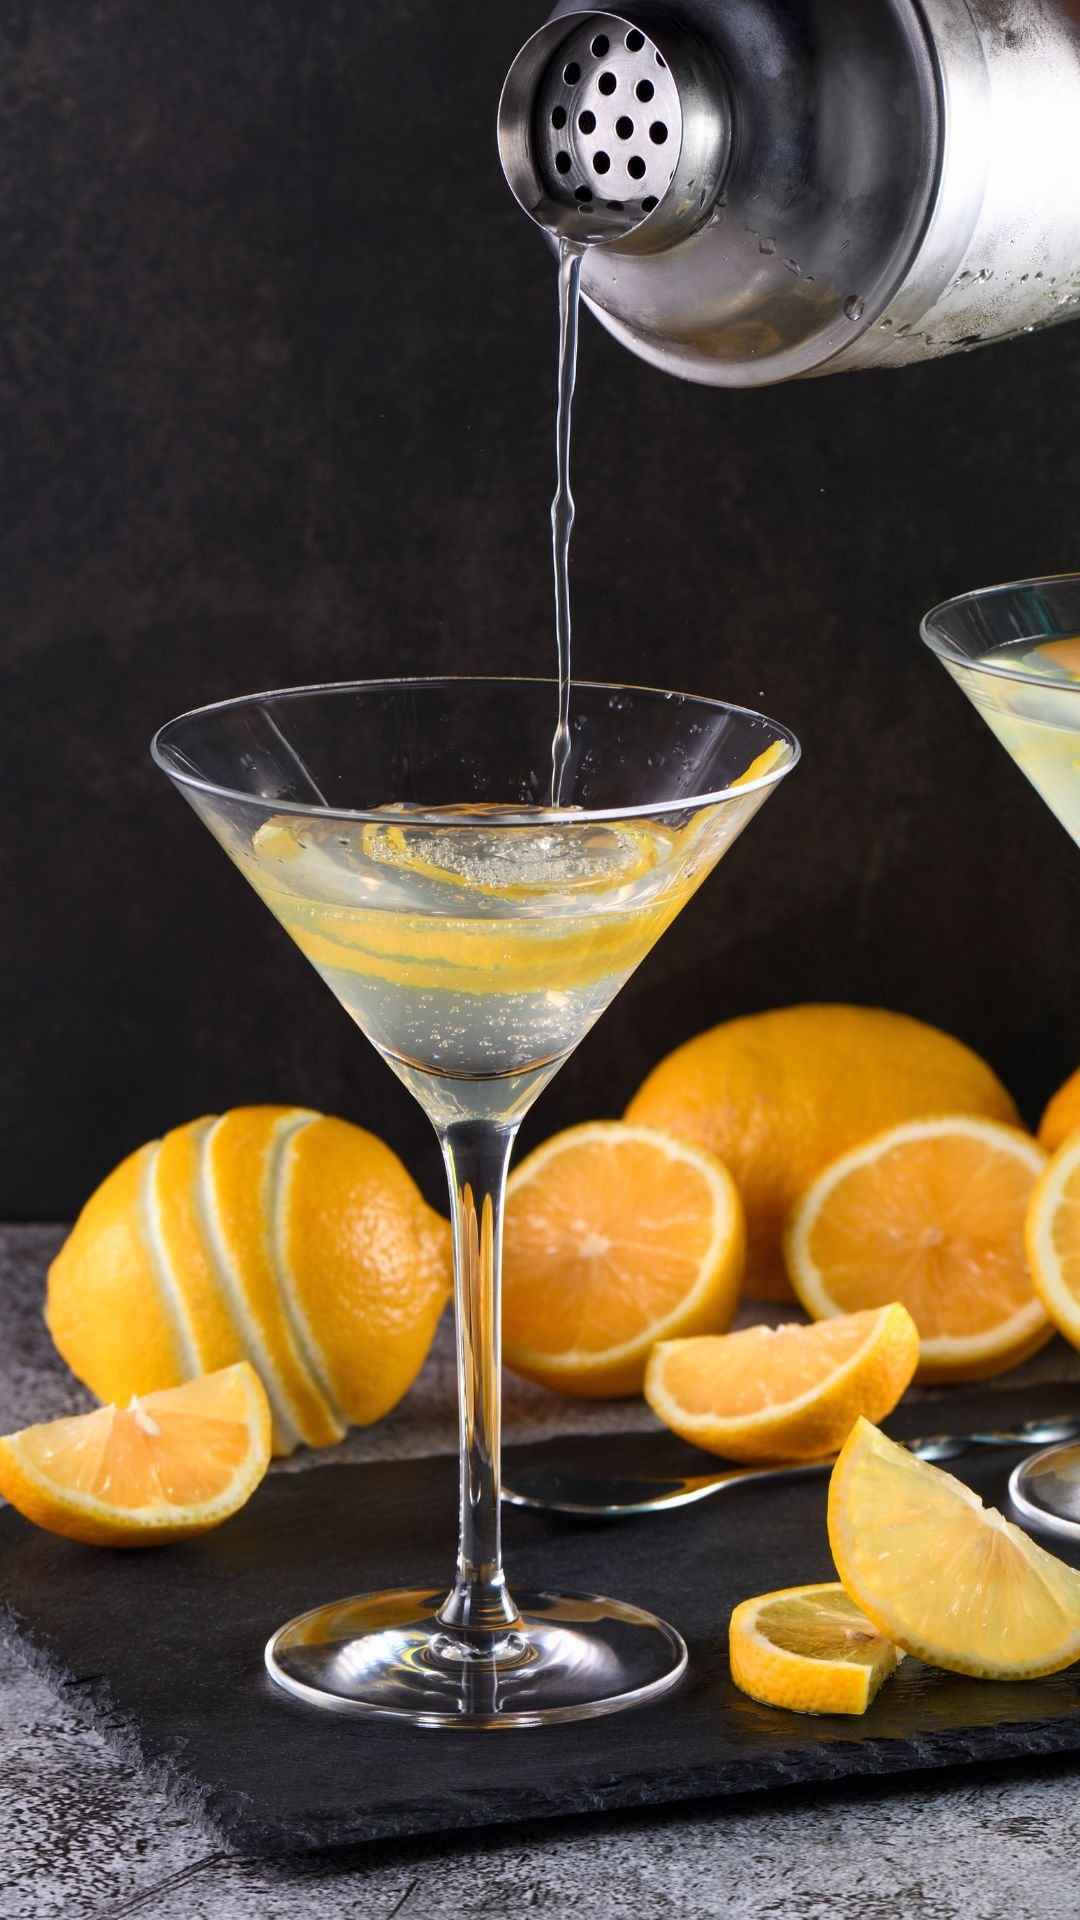 Lemon Drop Cocktails - Whipped It Up